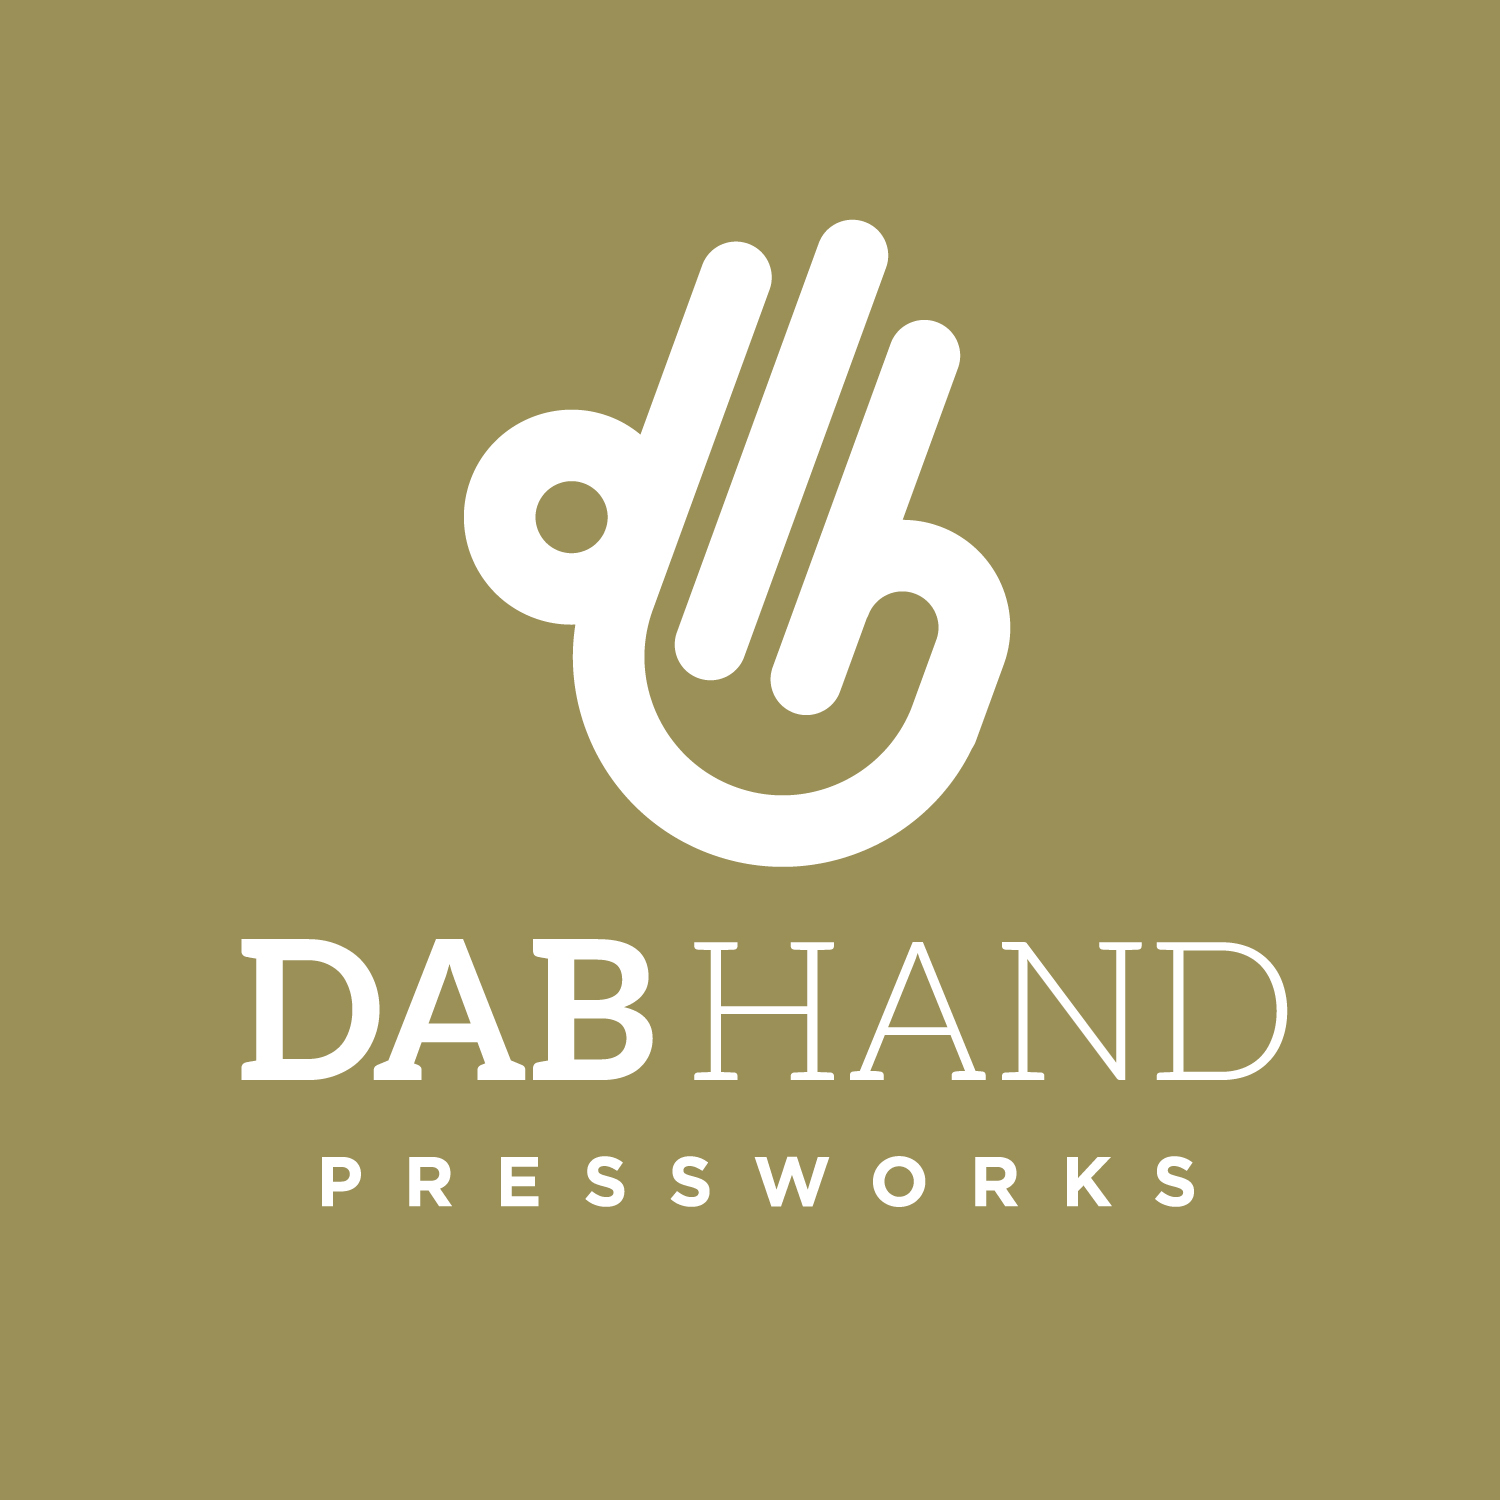 Dab hand logo v2